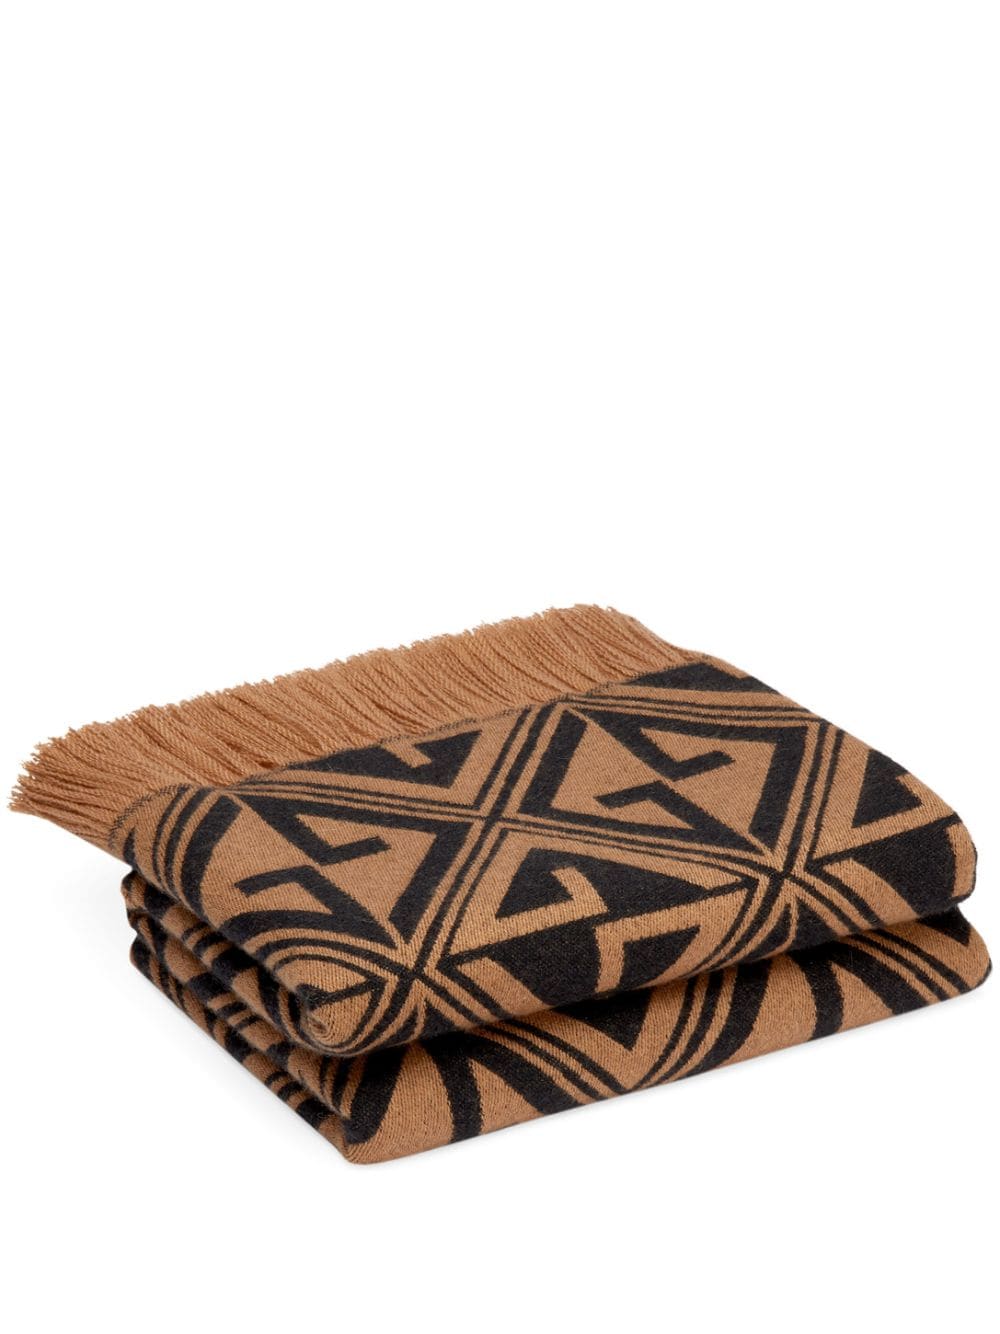 Gucci G rombus jacquard blanket - Brown von Gucci